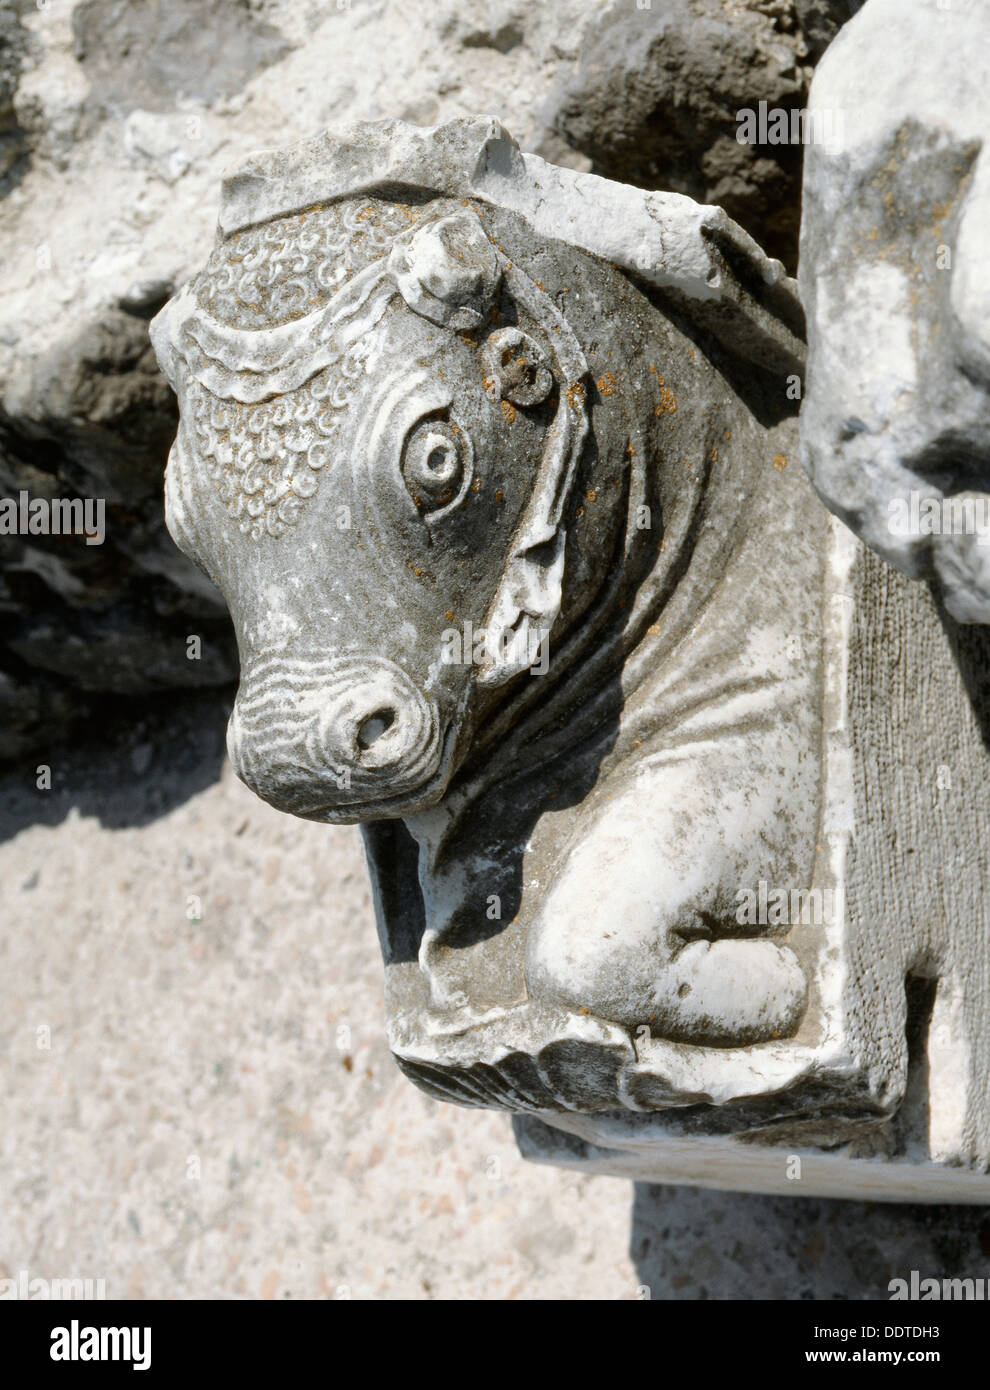 Bull's head, Cumae, near Naples, Italy. Artist: Werner Forman Stock Photo